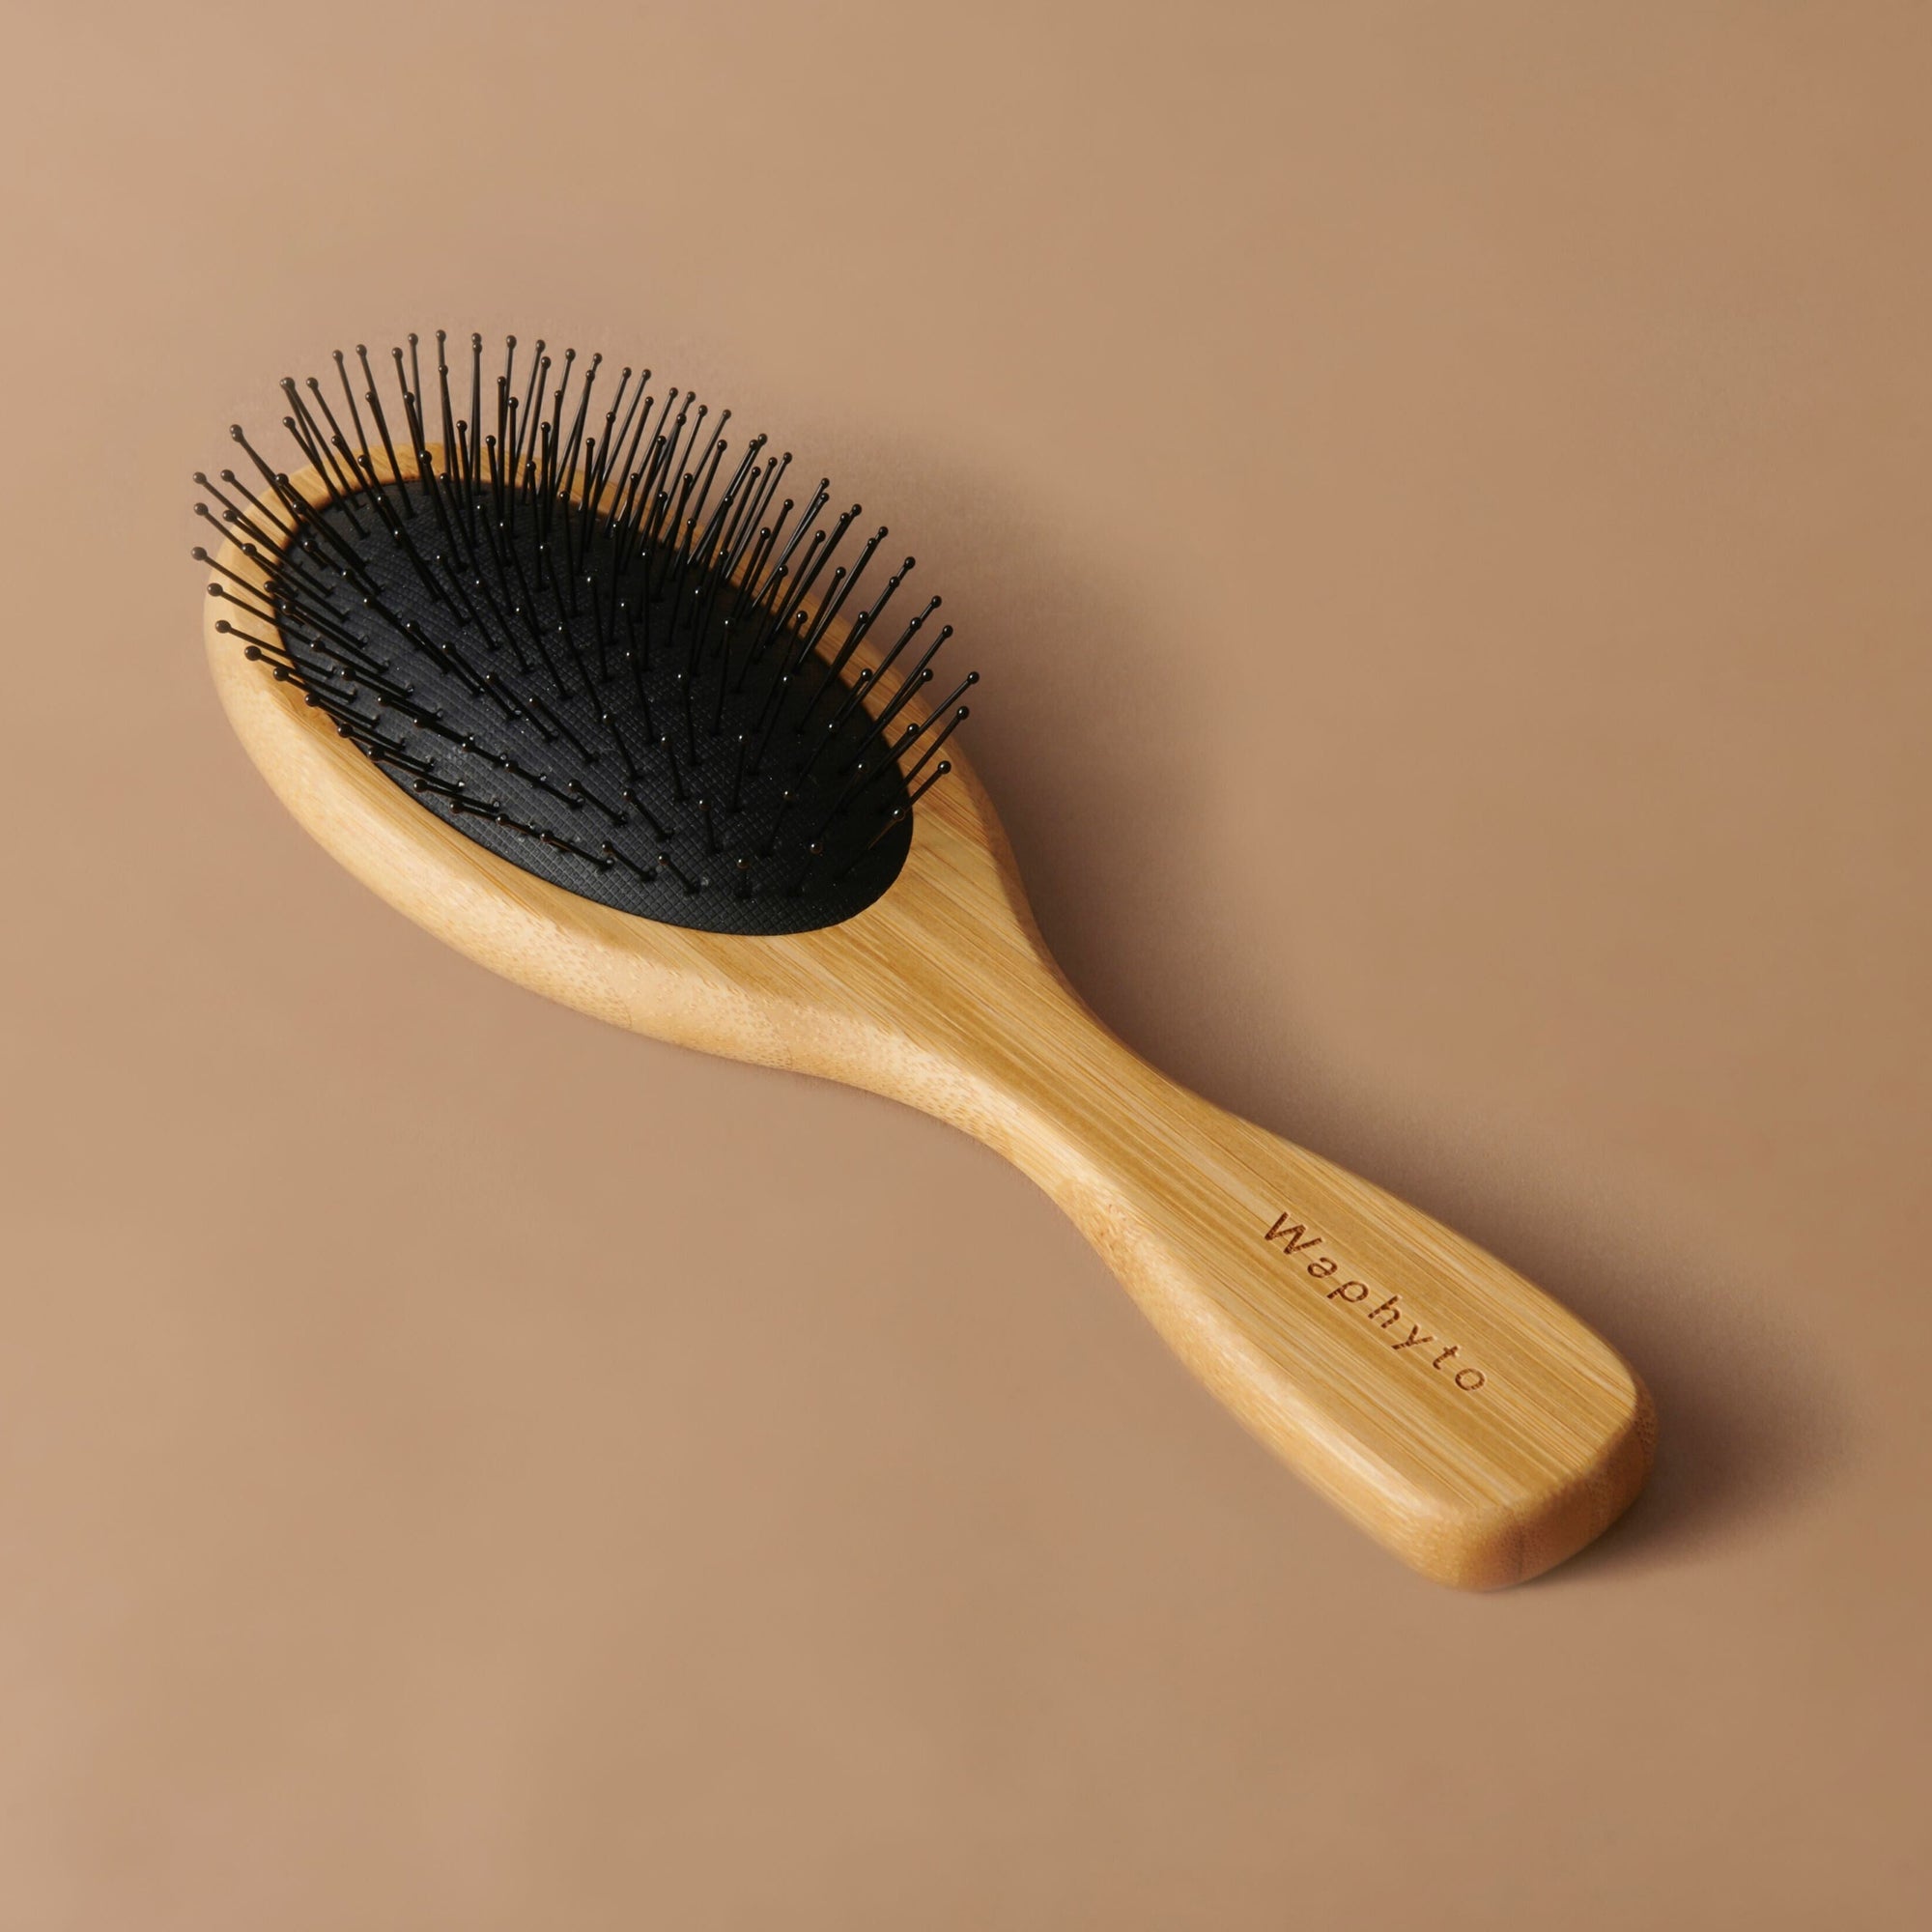 Upcycled Bamboo Hair Brush